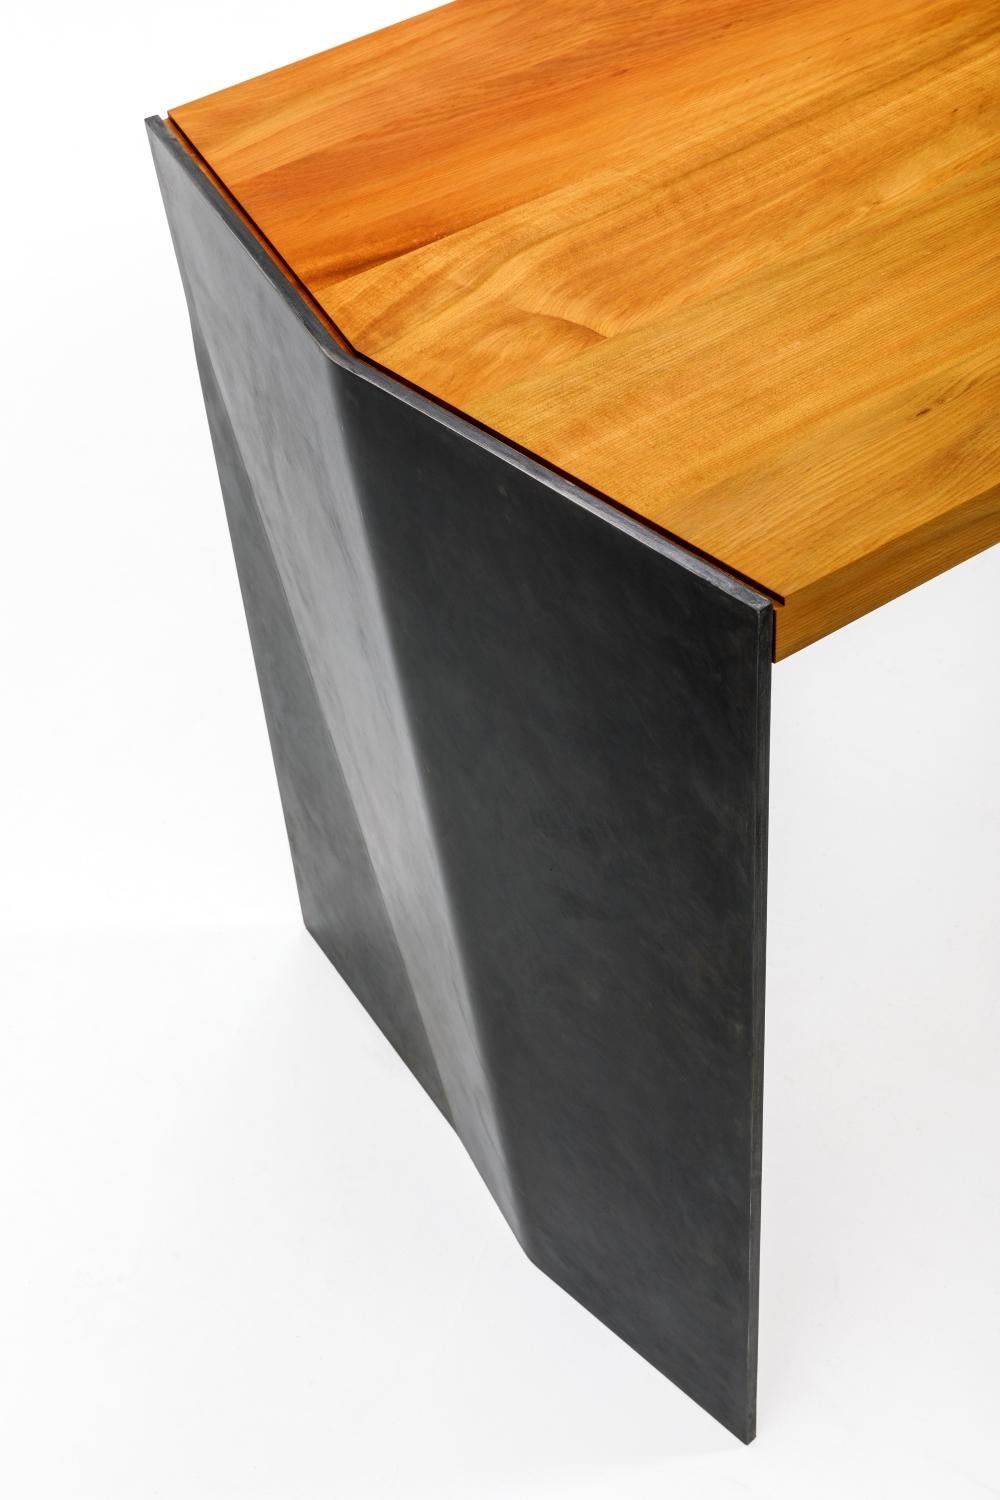 natural sustainable wood desks